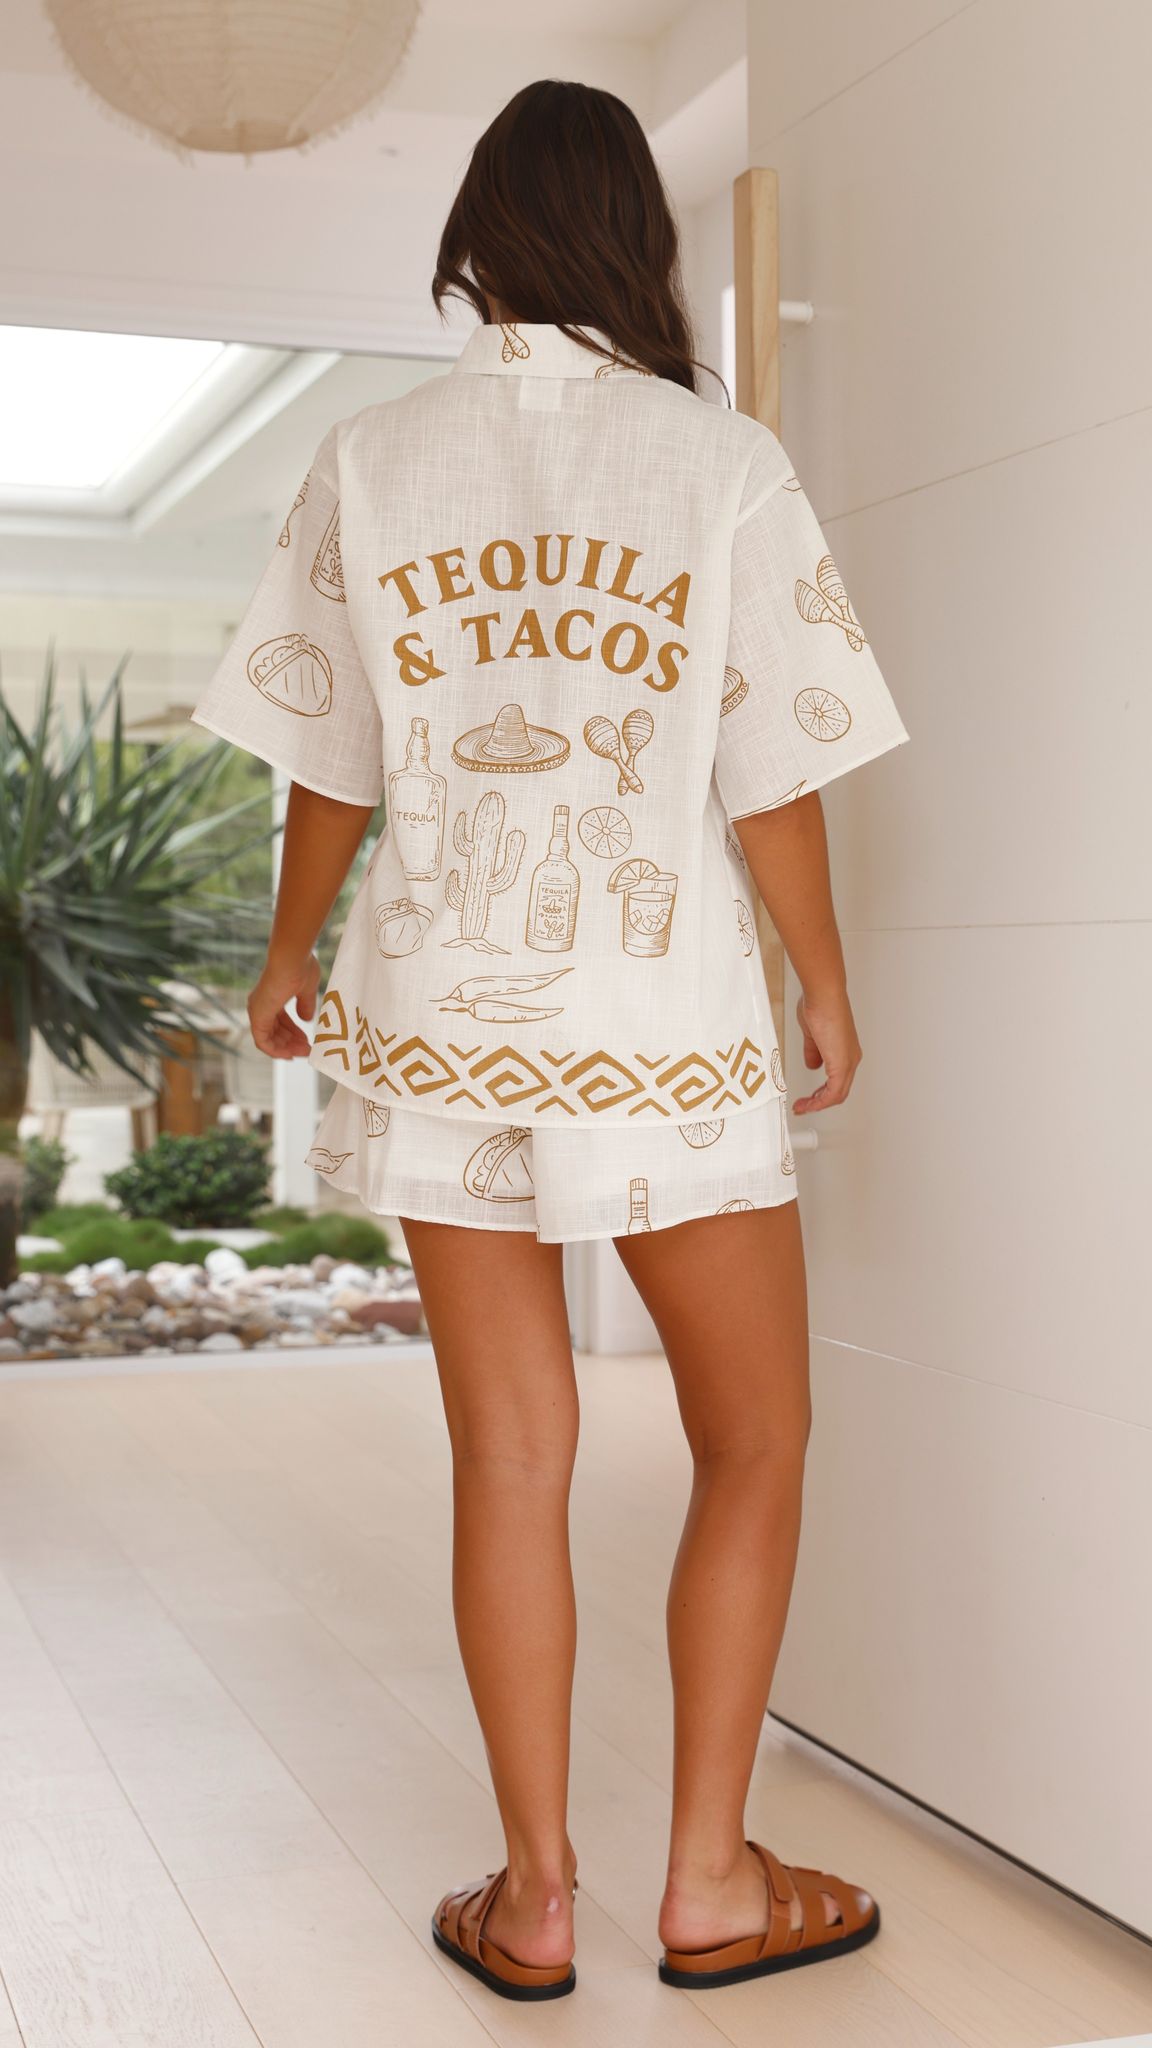 Bobbi Button Up Shirt and Shorts - White/Tan Tequila & Tacos Print